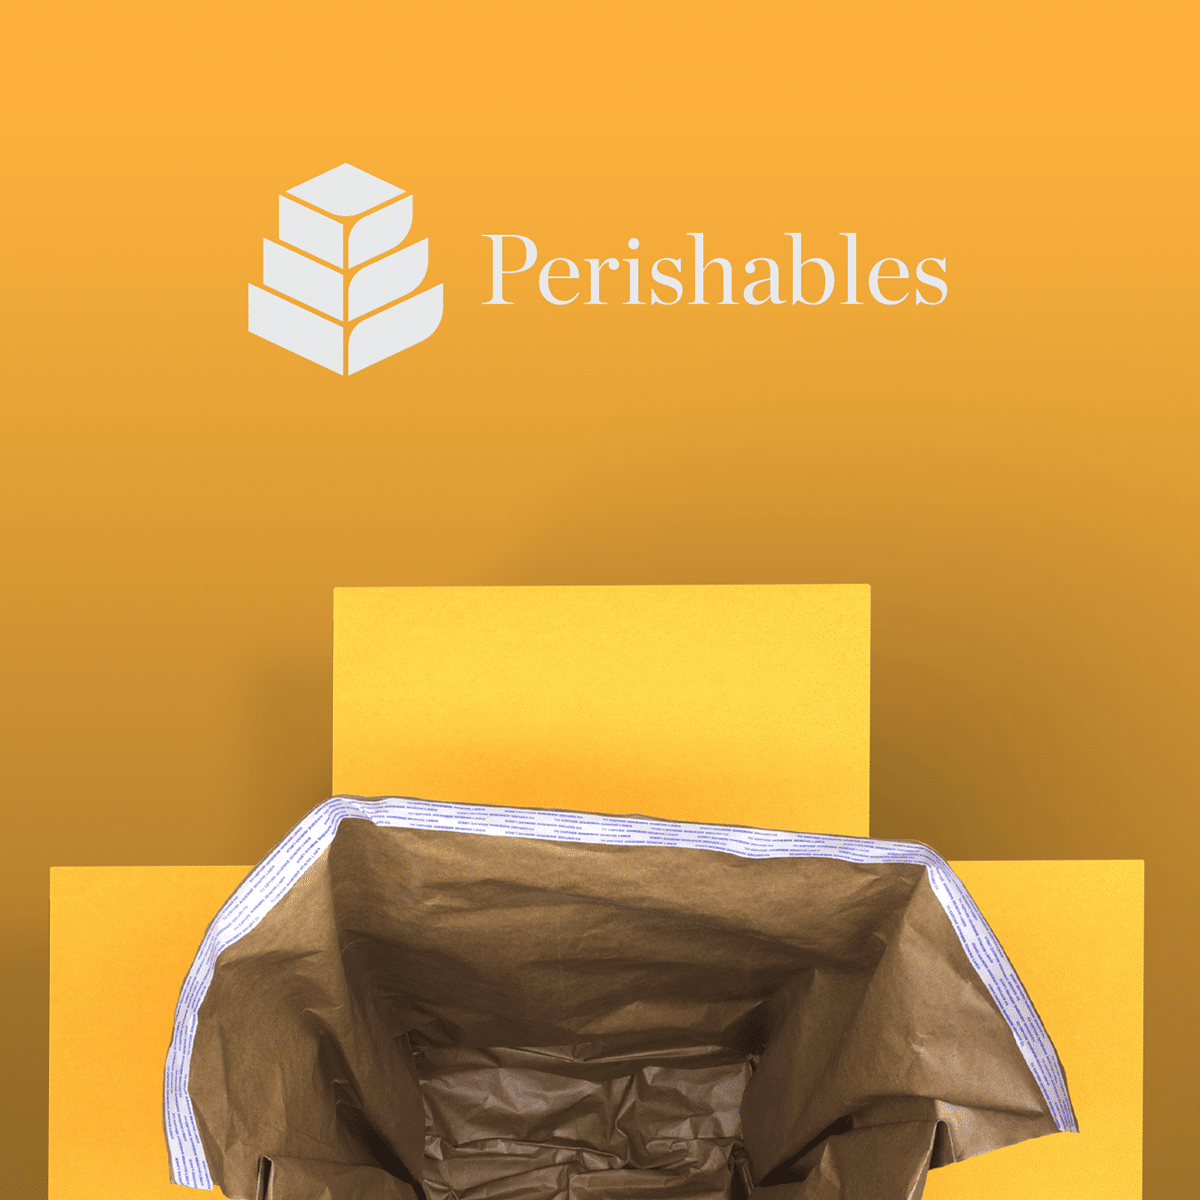 define perishable